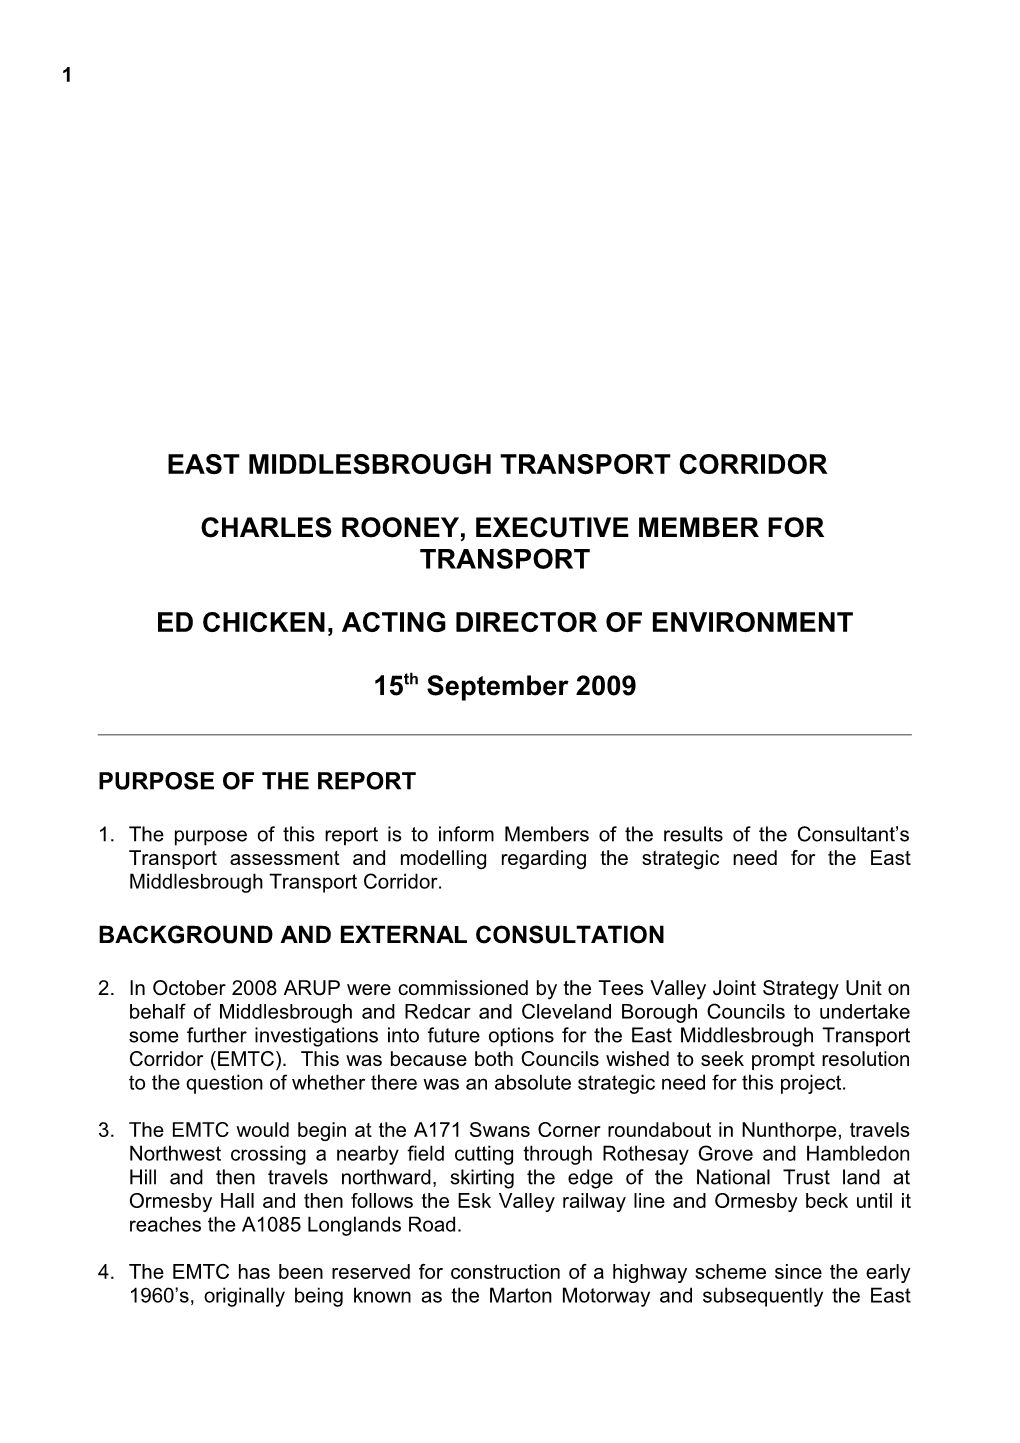 East Middlesbrough Transport Corridor